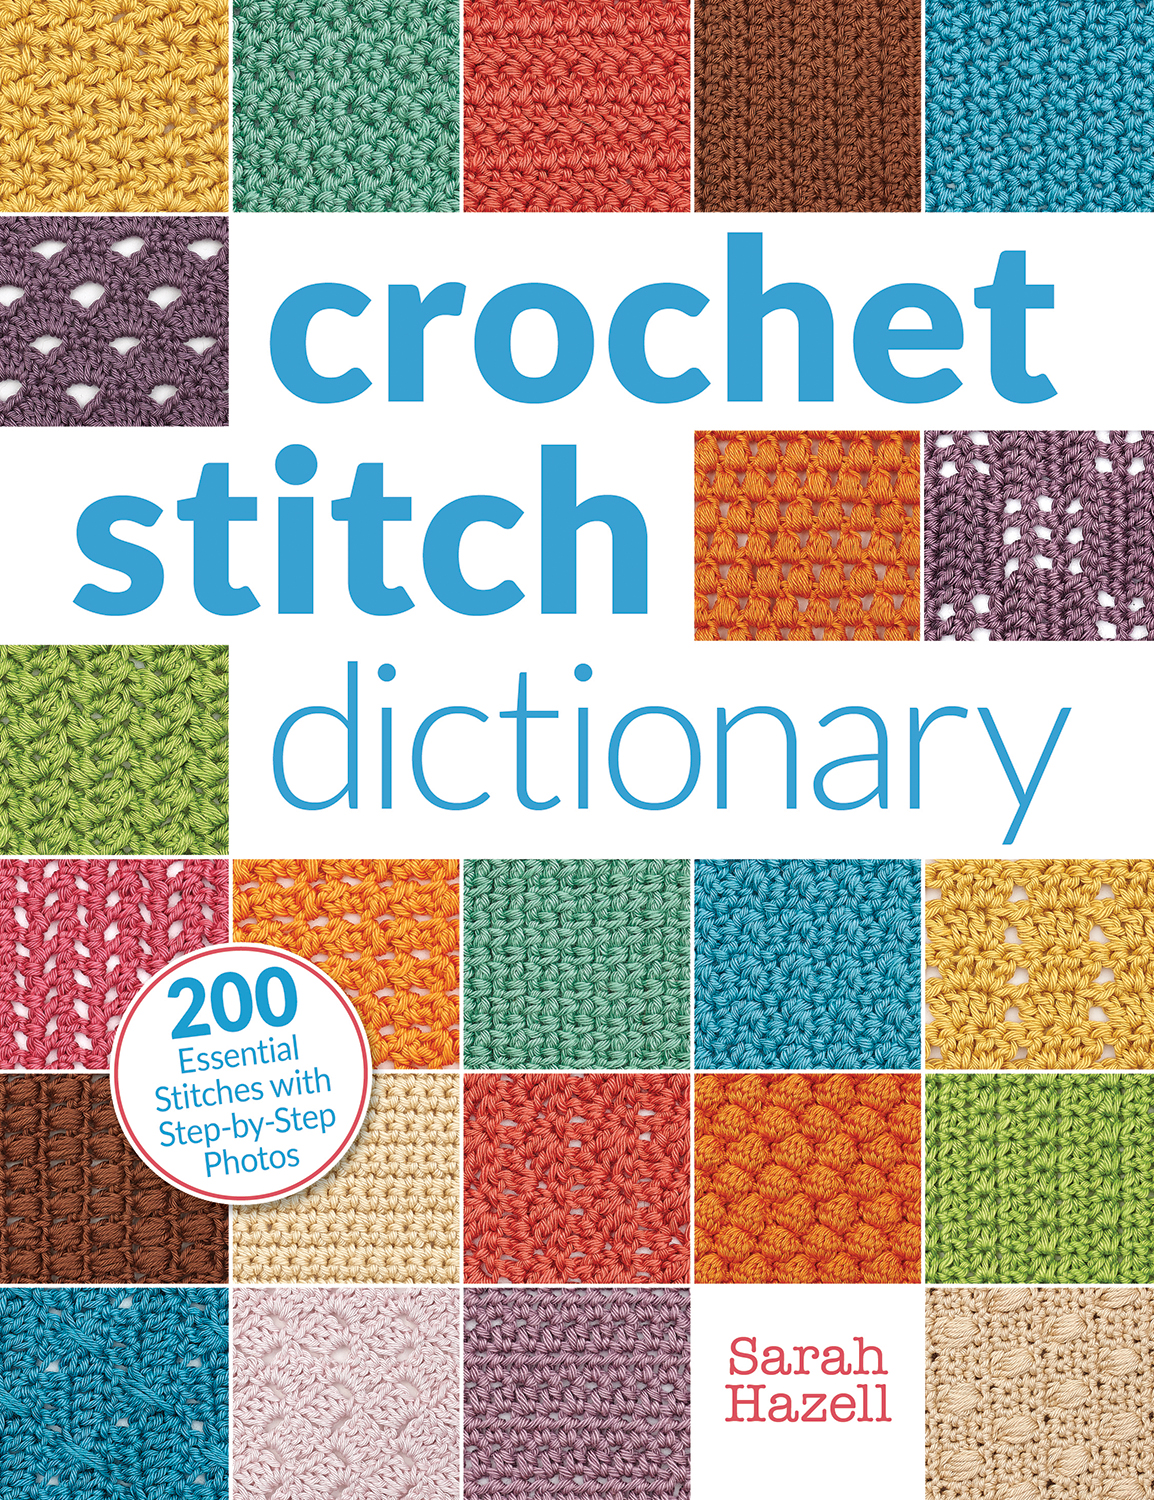 the crochet doctor™: CROCHET STITCH DICTIONARY by Sarah Hazell